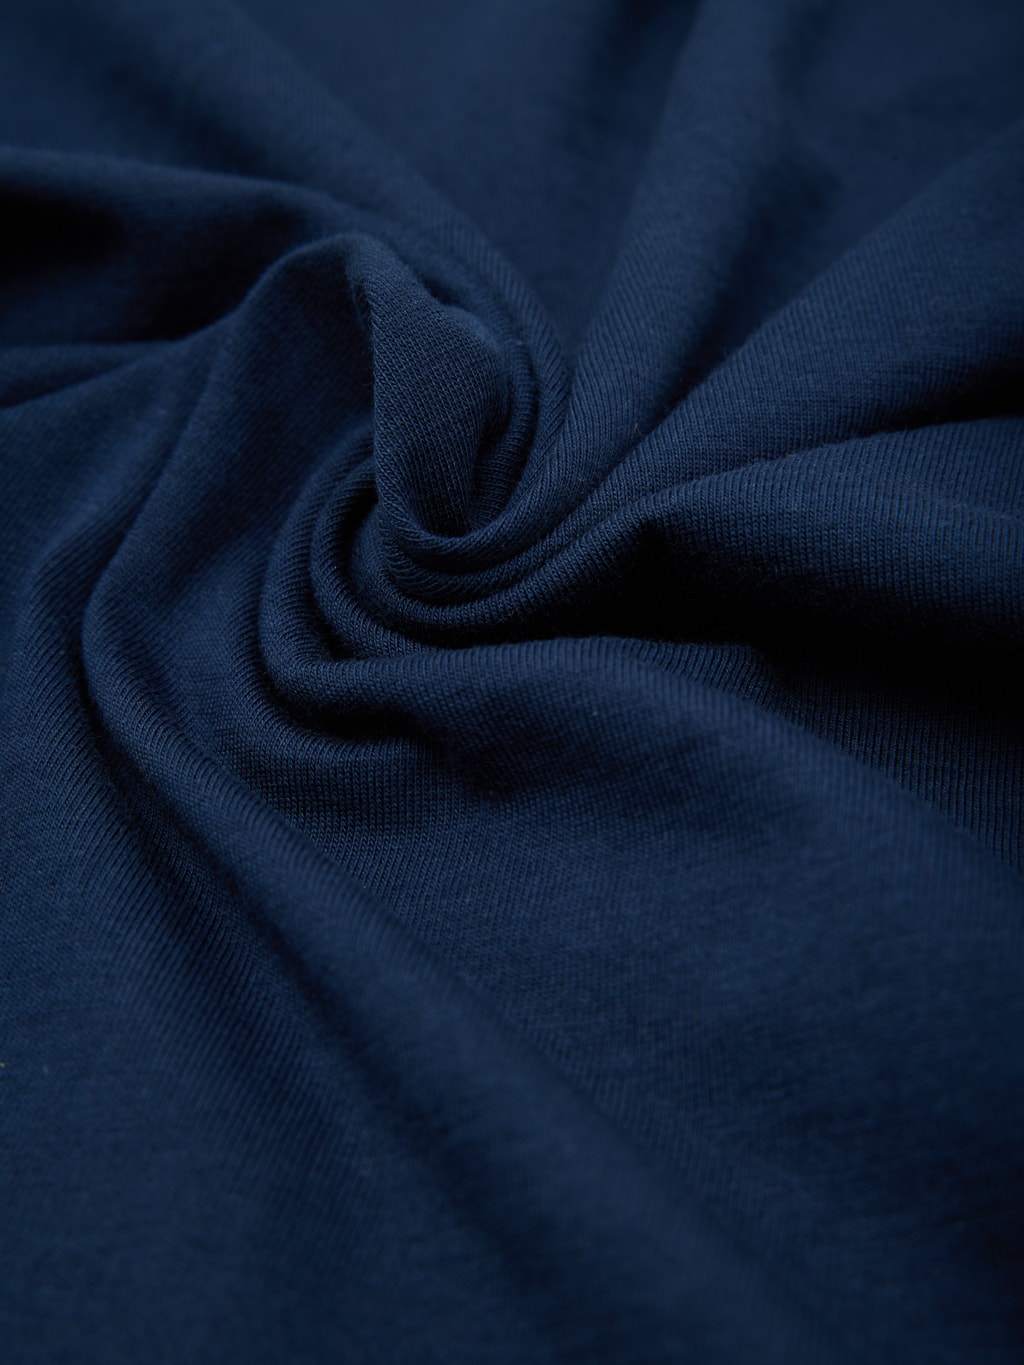 Merz b Schwanen 1950s Loopwheeled Classic Fit TShirt ink blue texture